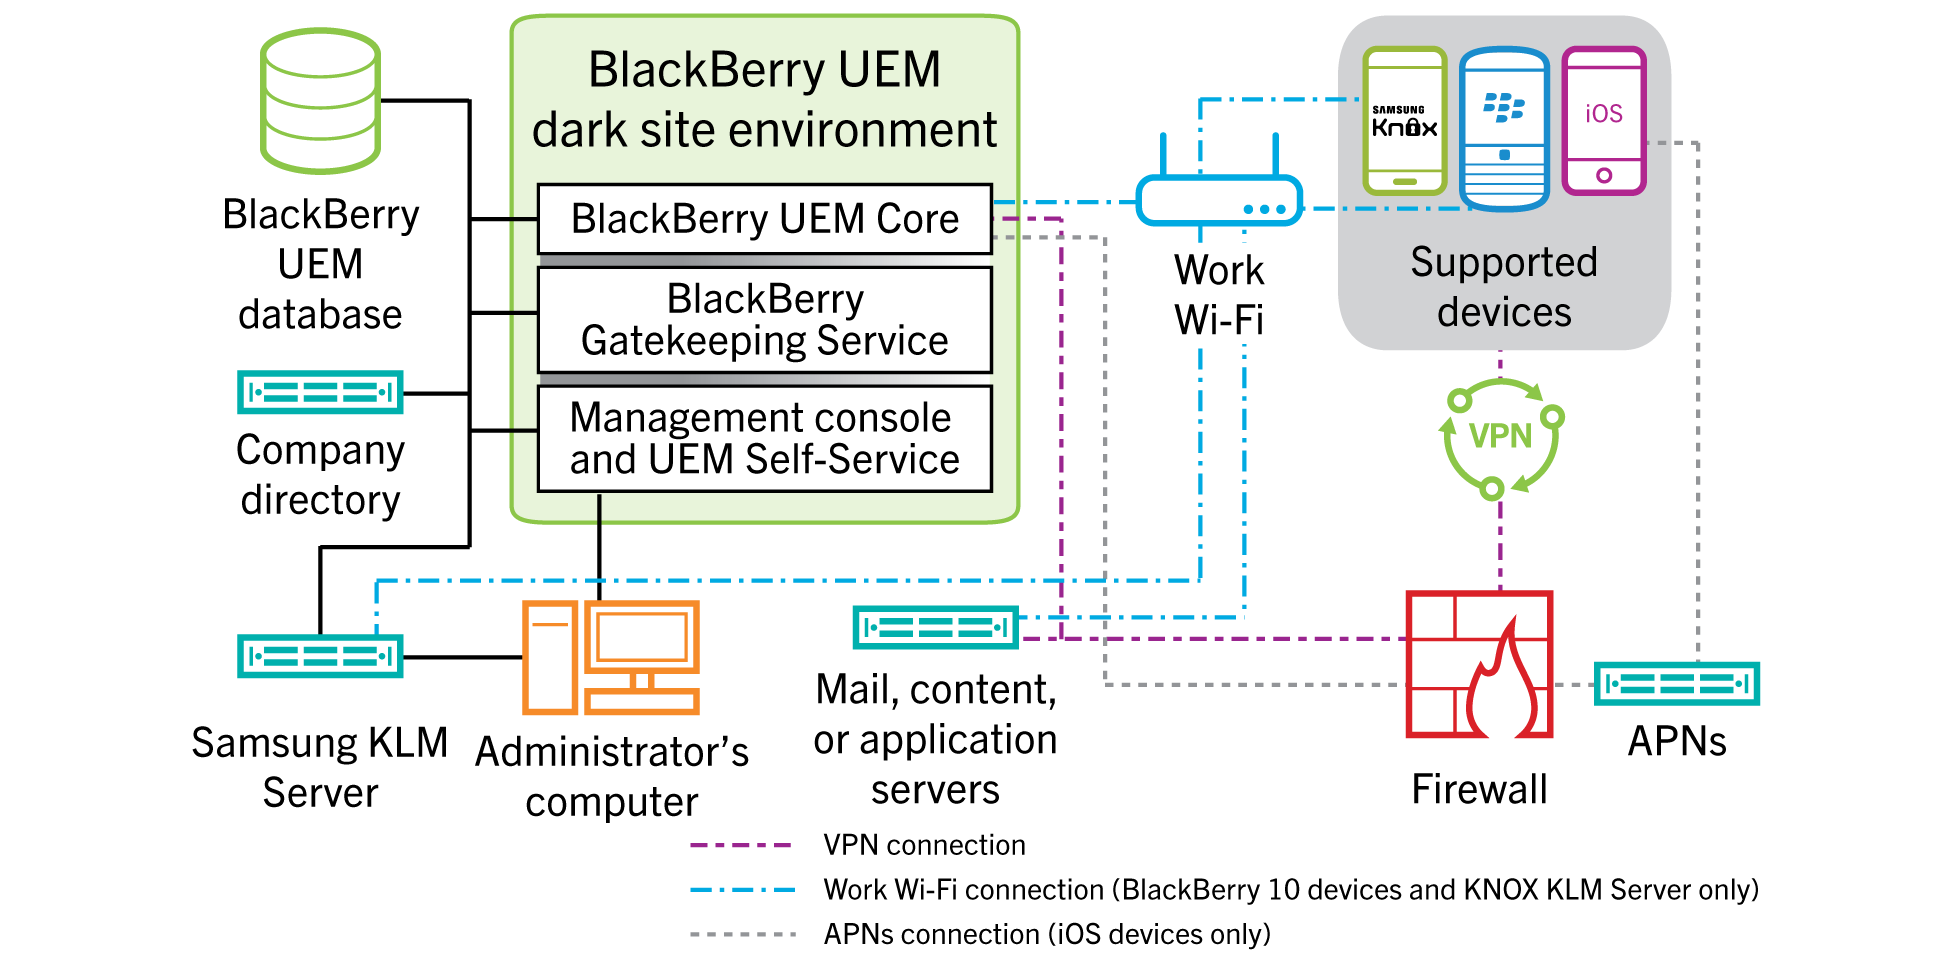 Architecture diagram showing BlackBerry UEM Dark Site components